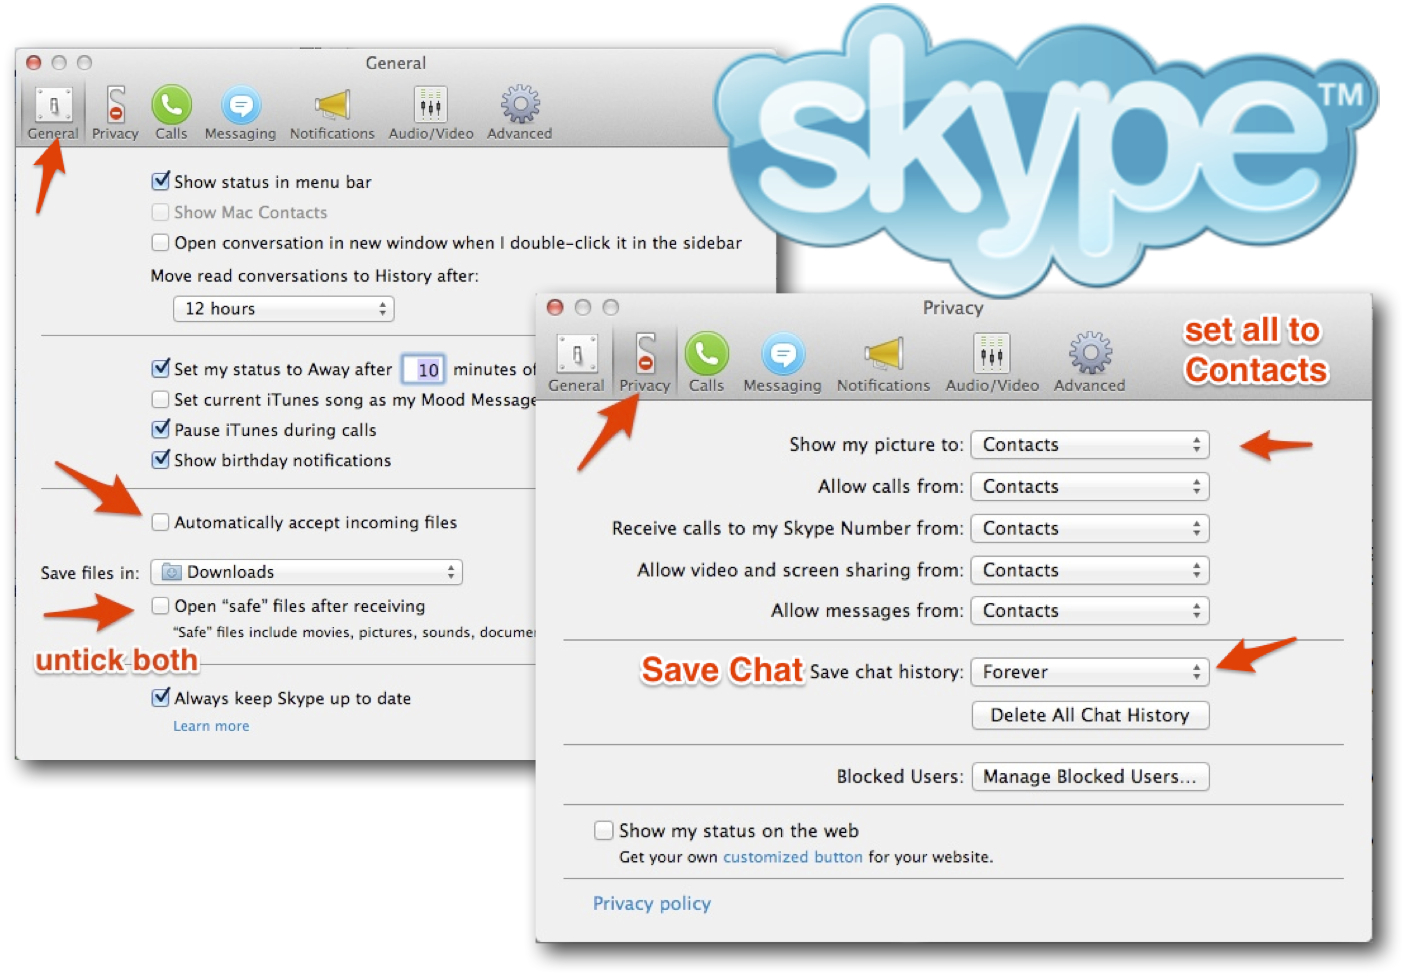 Skype Privacy Settings